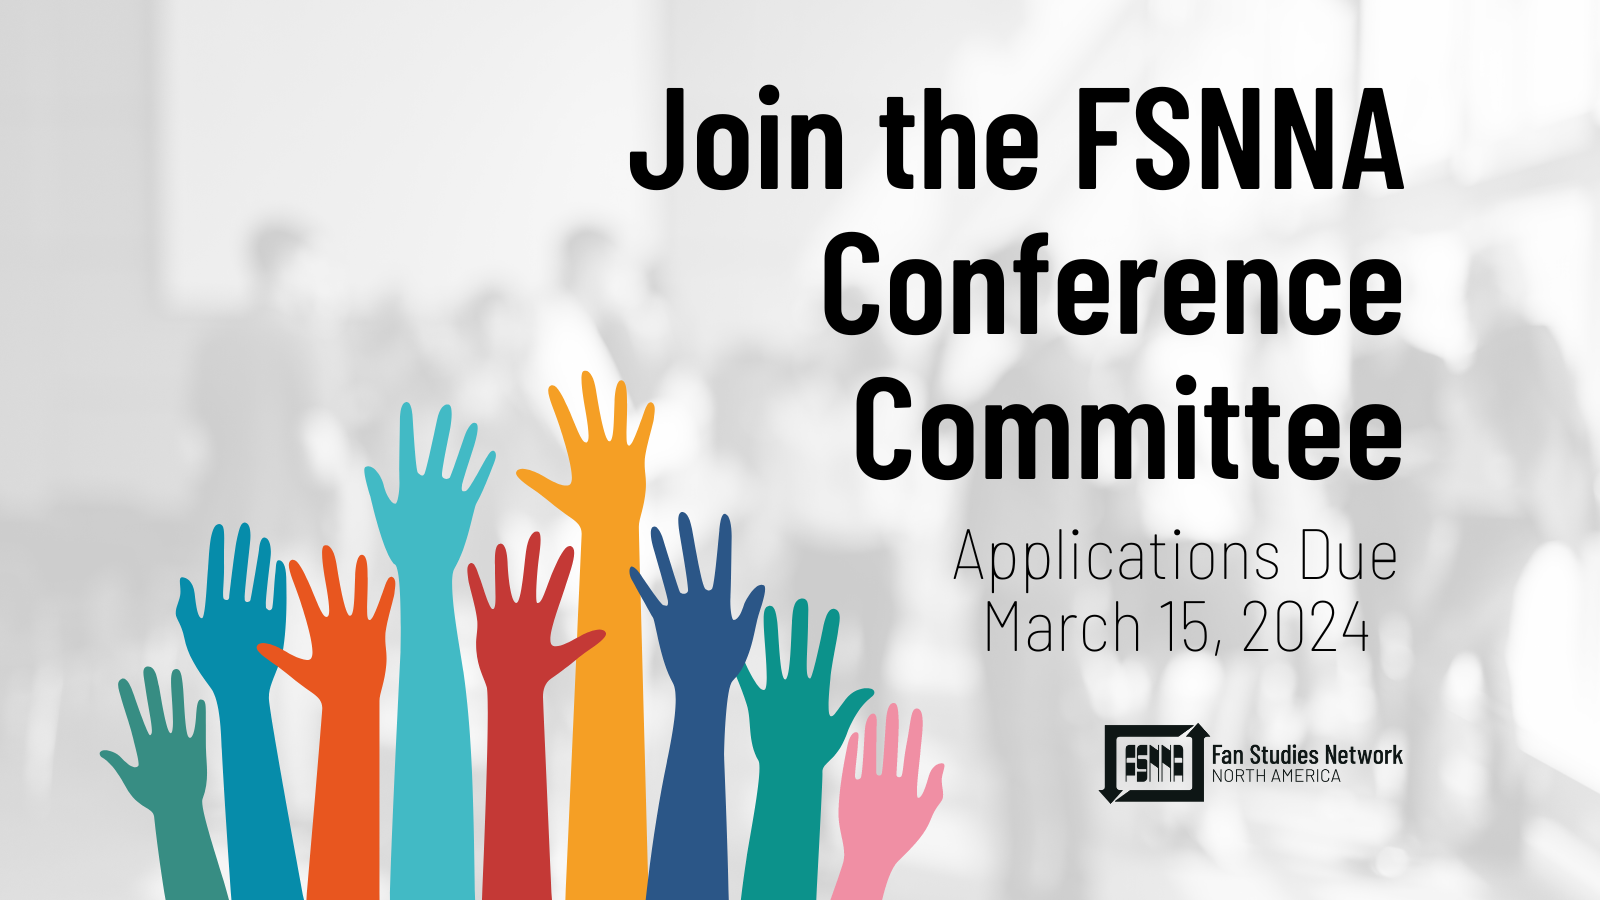 Join the FSNNA Team